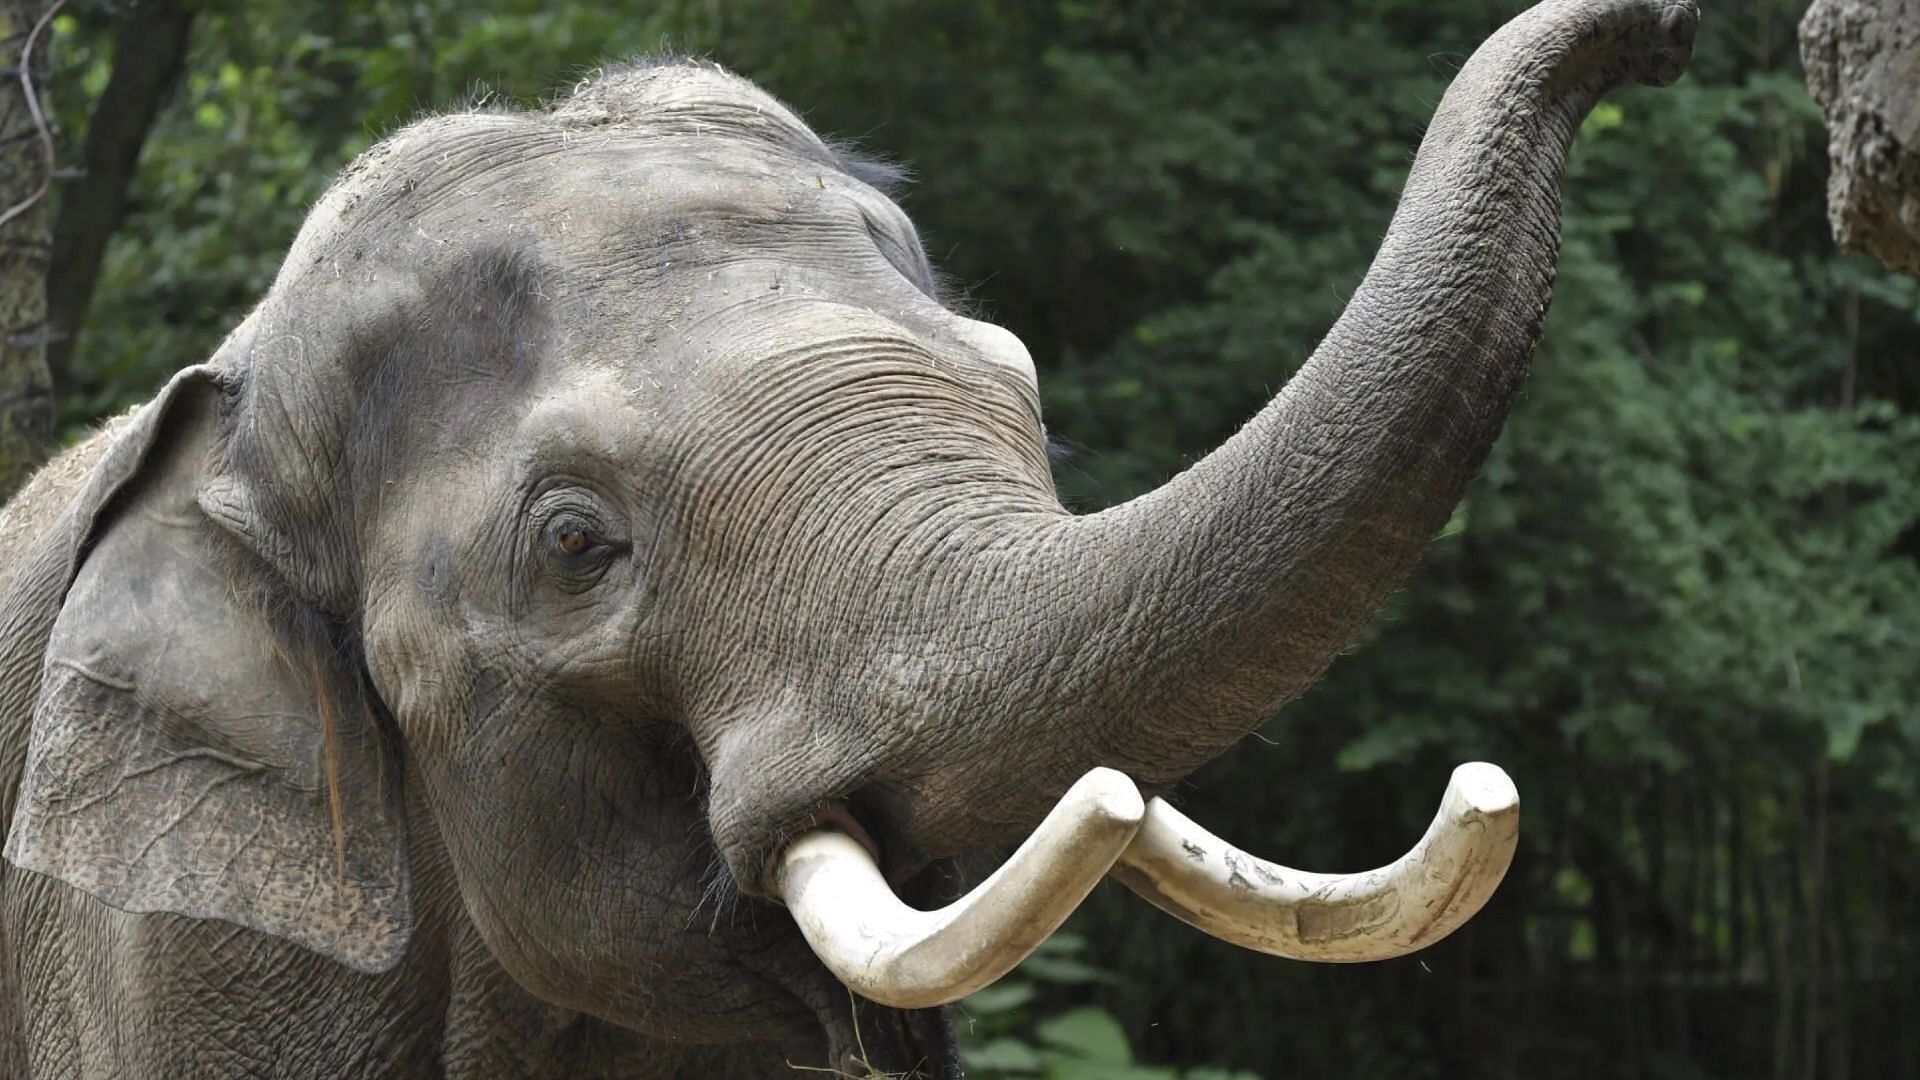 Raja the elephant is leaving St. Louis Zoo. (Image via the St. Louis Zoo website)